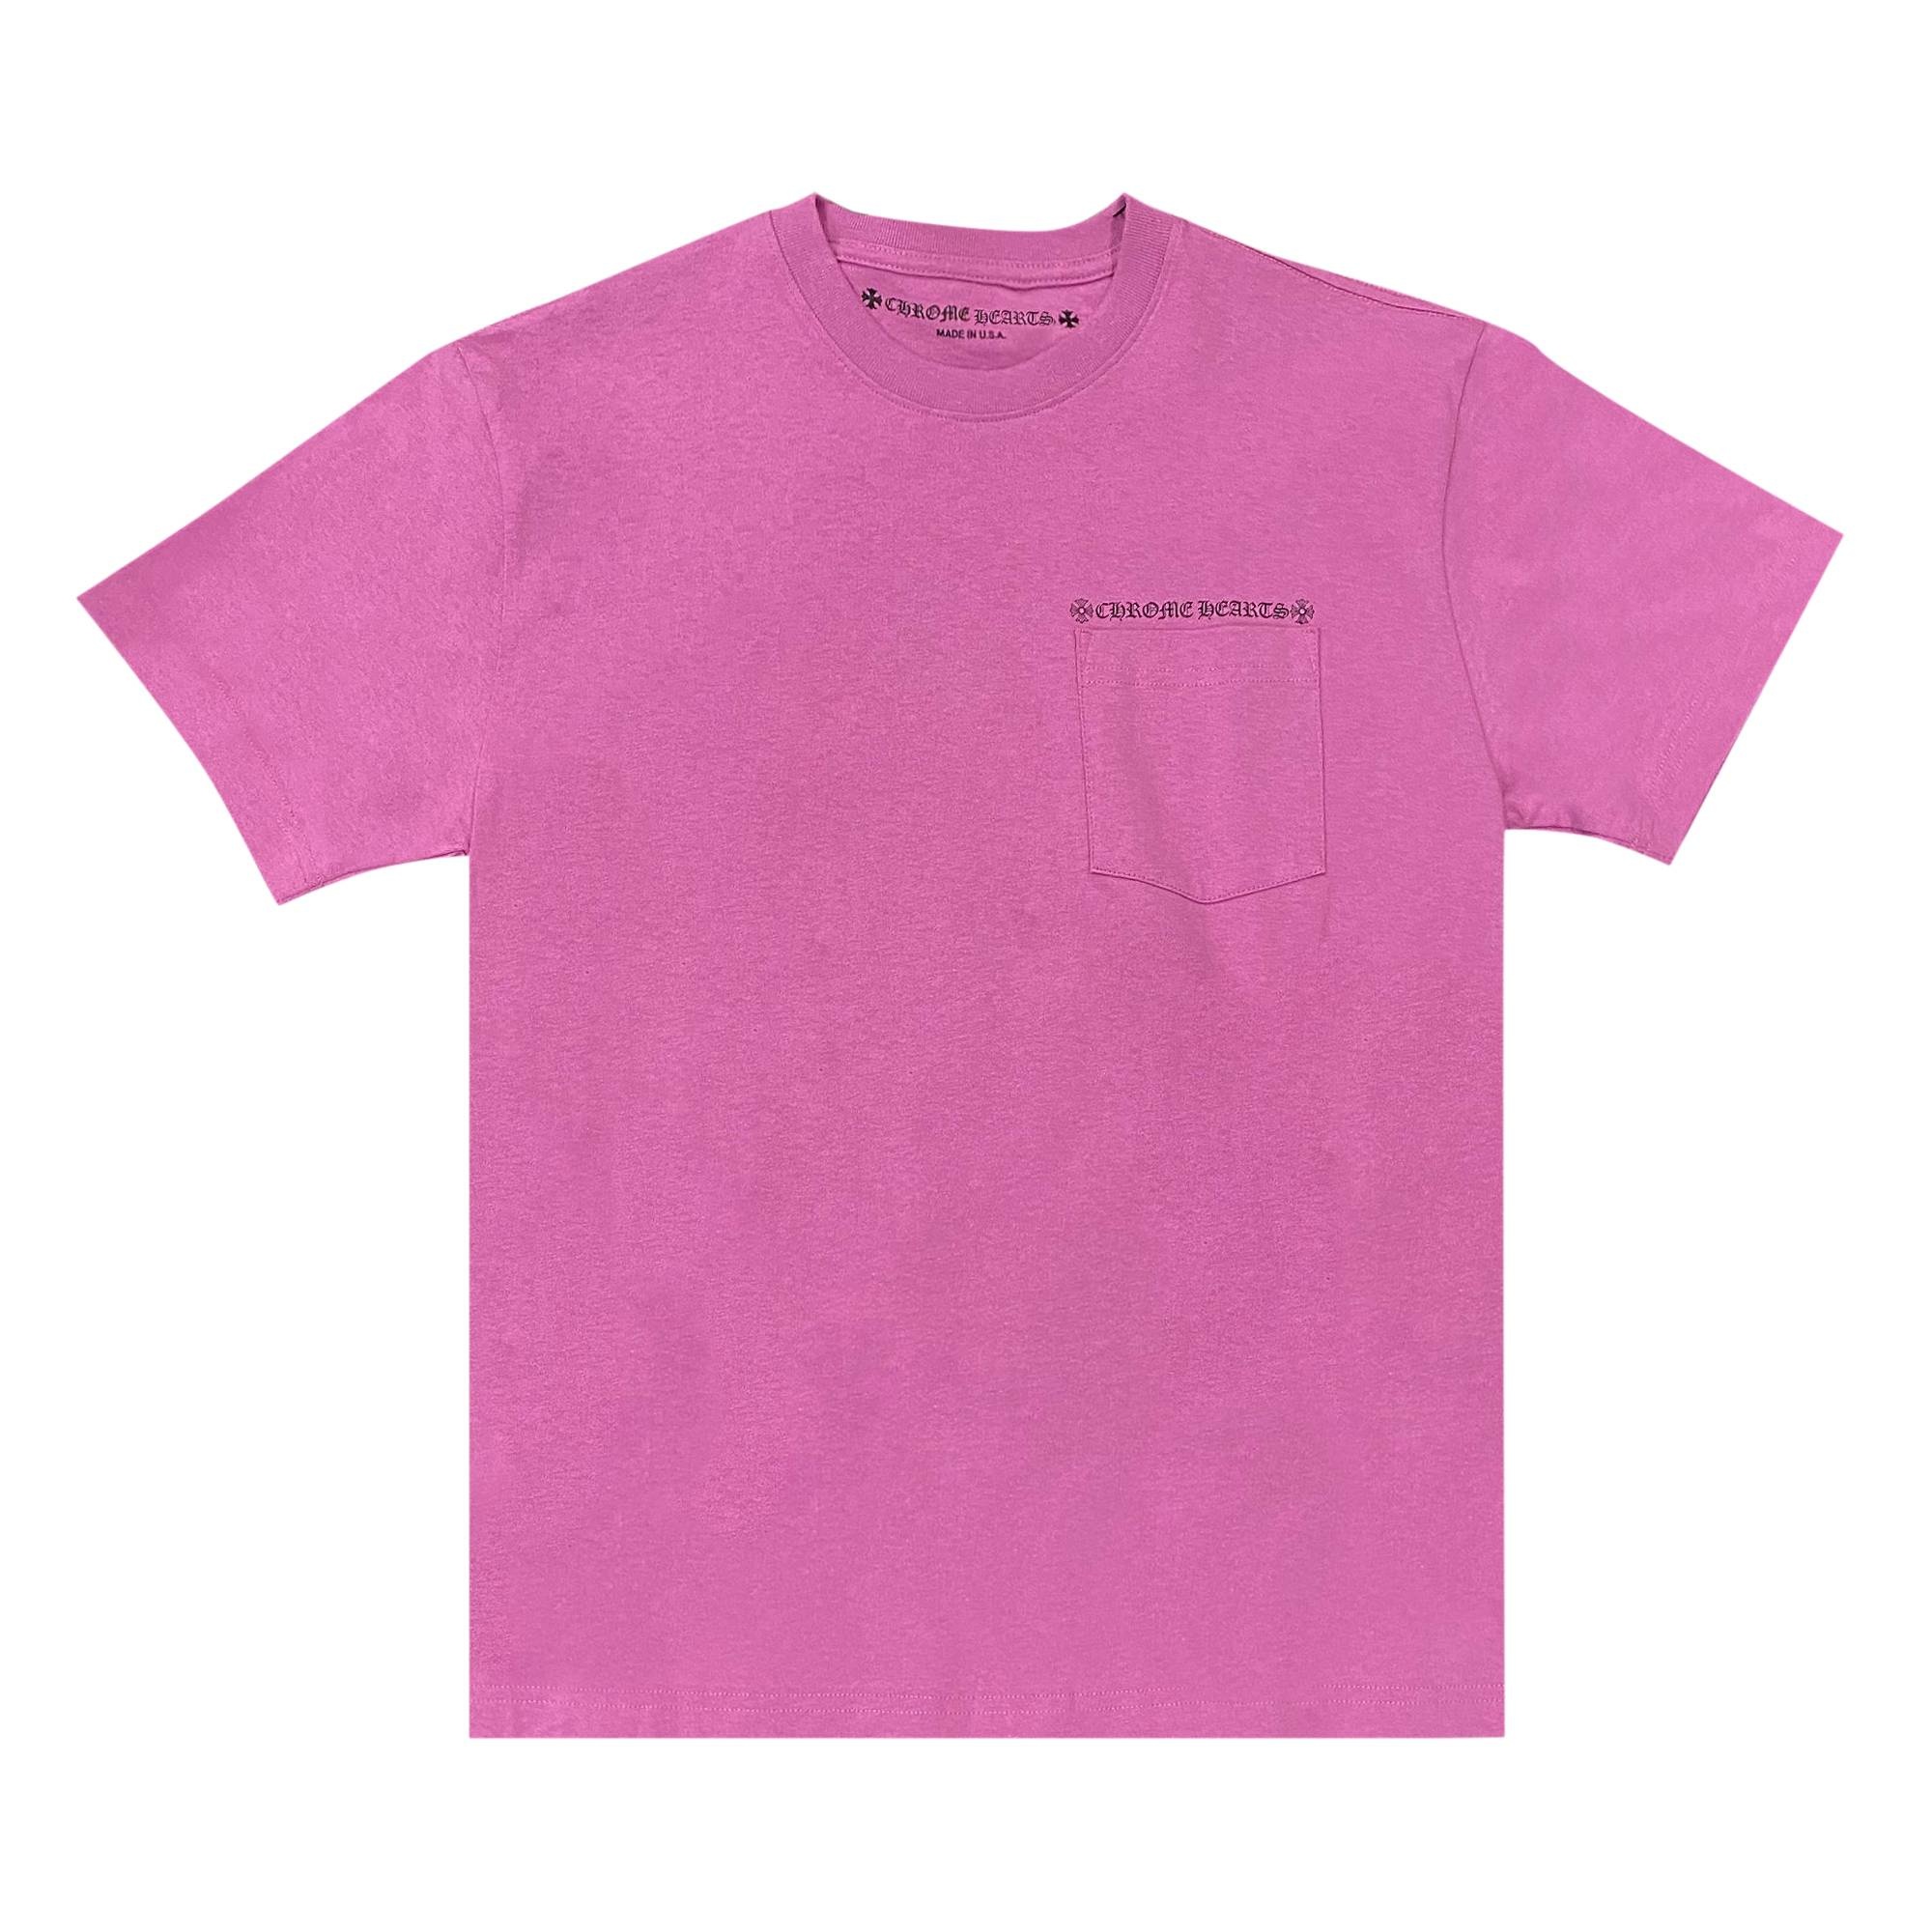 Chrome Hearts x Matty Boy Spider T-Shirt 'Purple' - 1